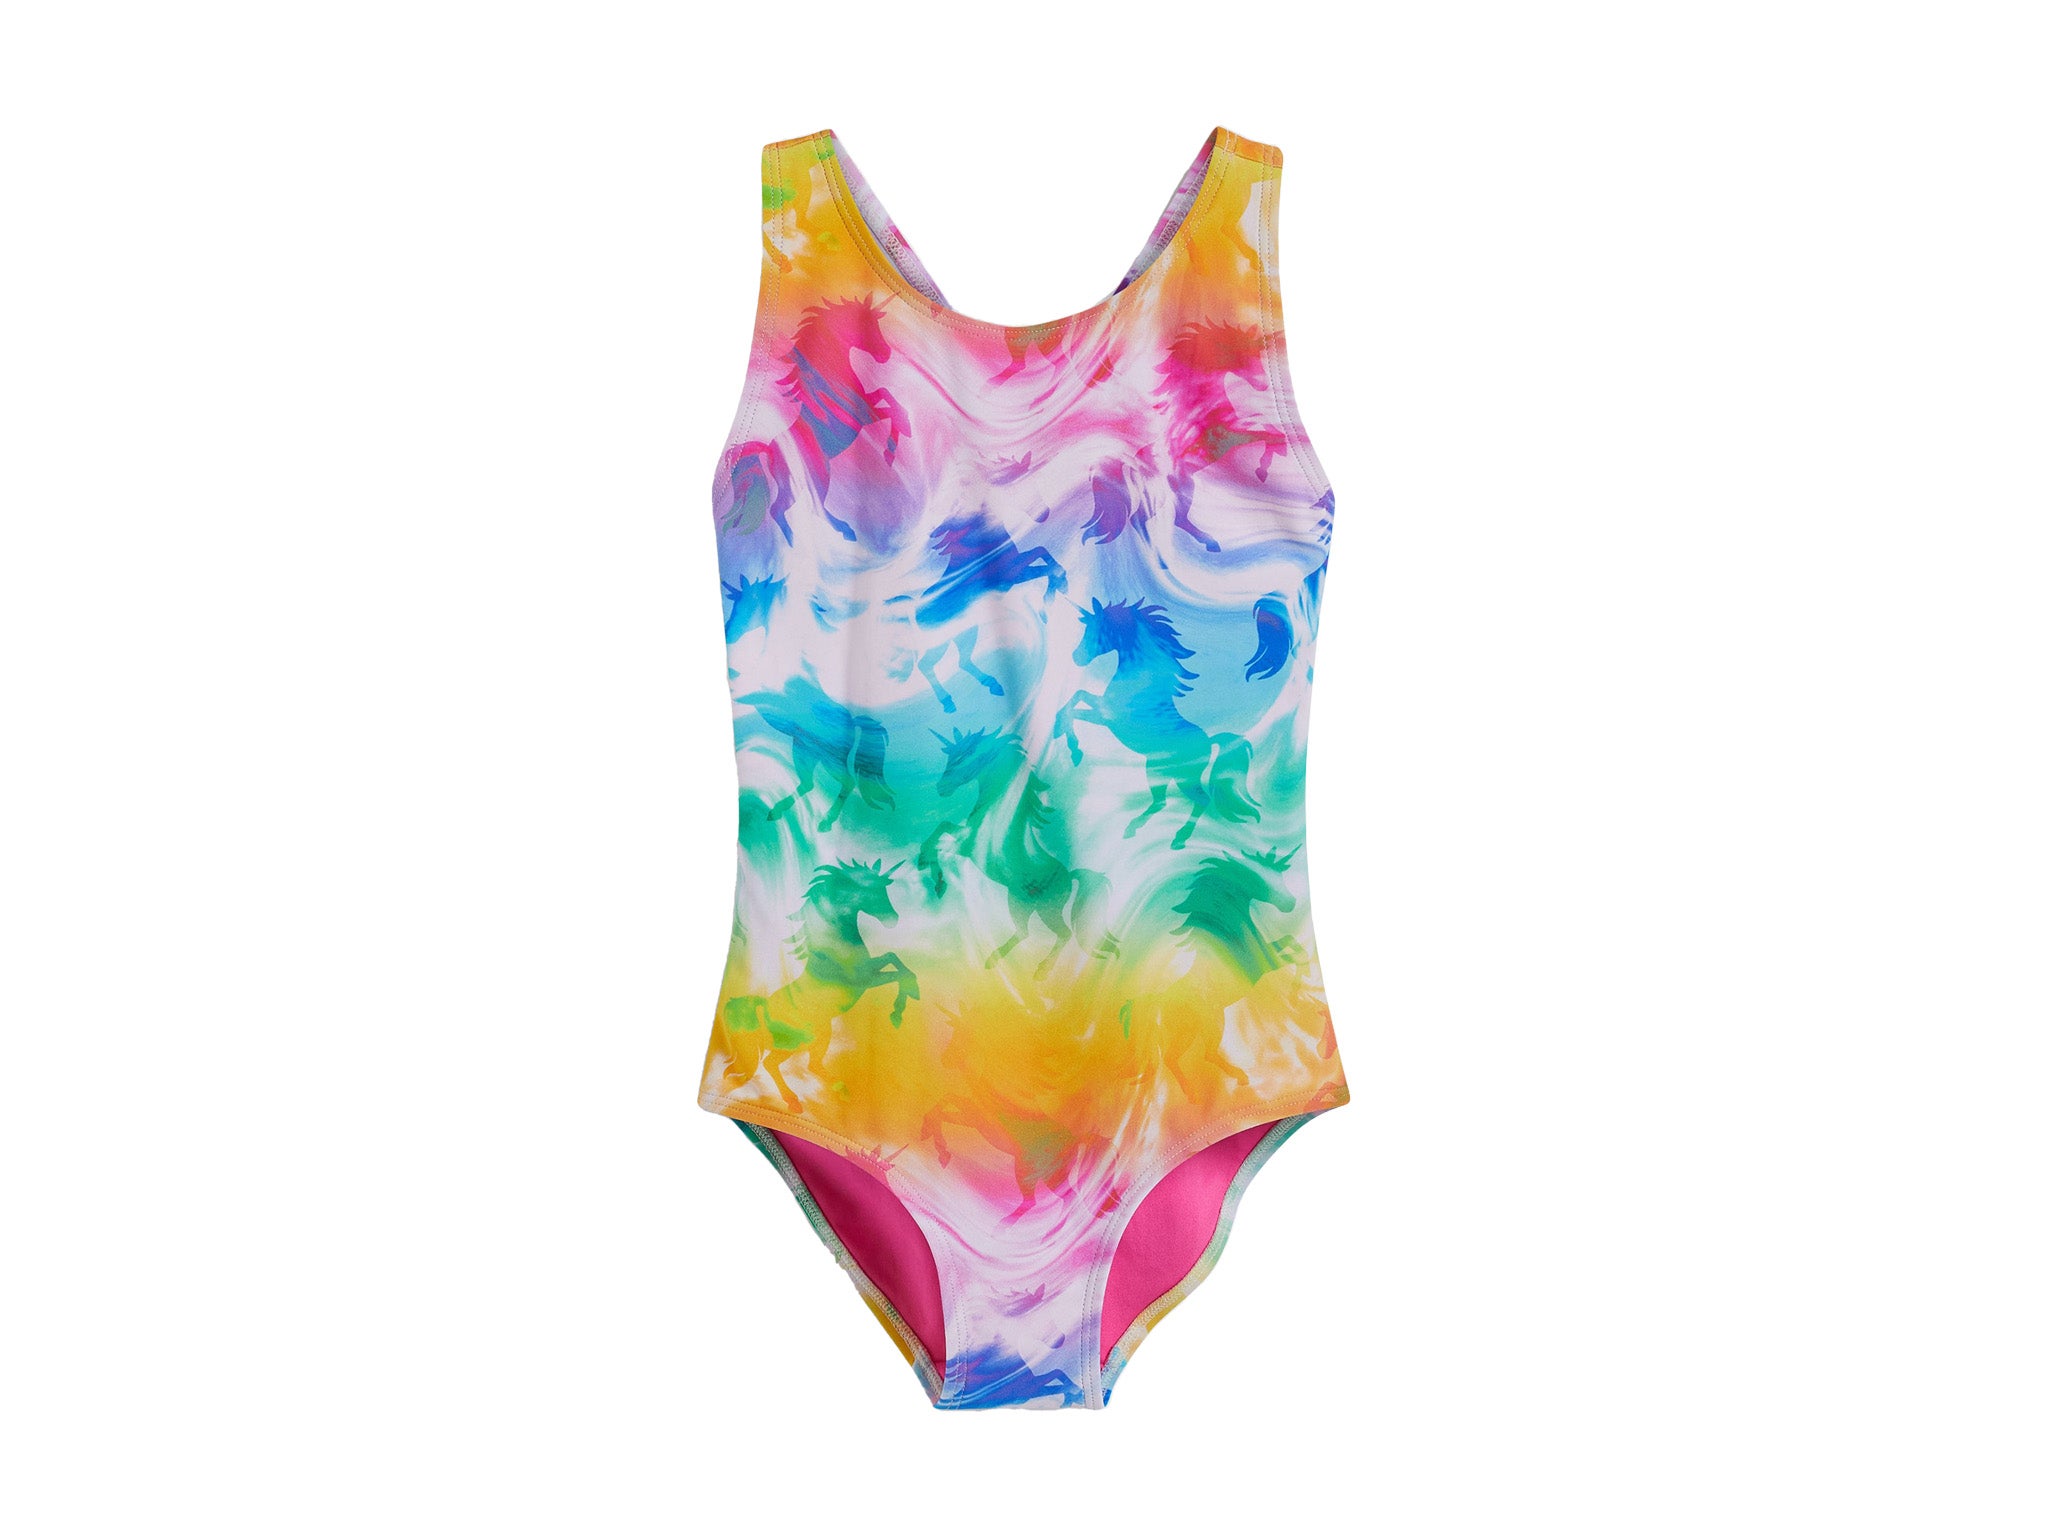 Next sports swimsuit multi unicorn tie dye indybest.jpg